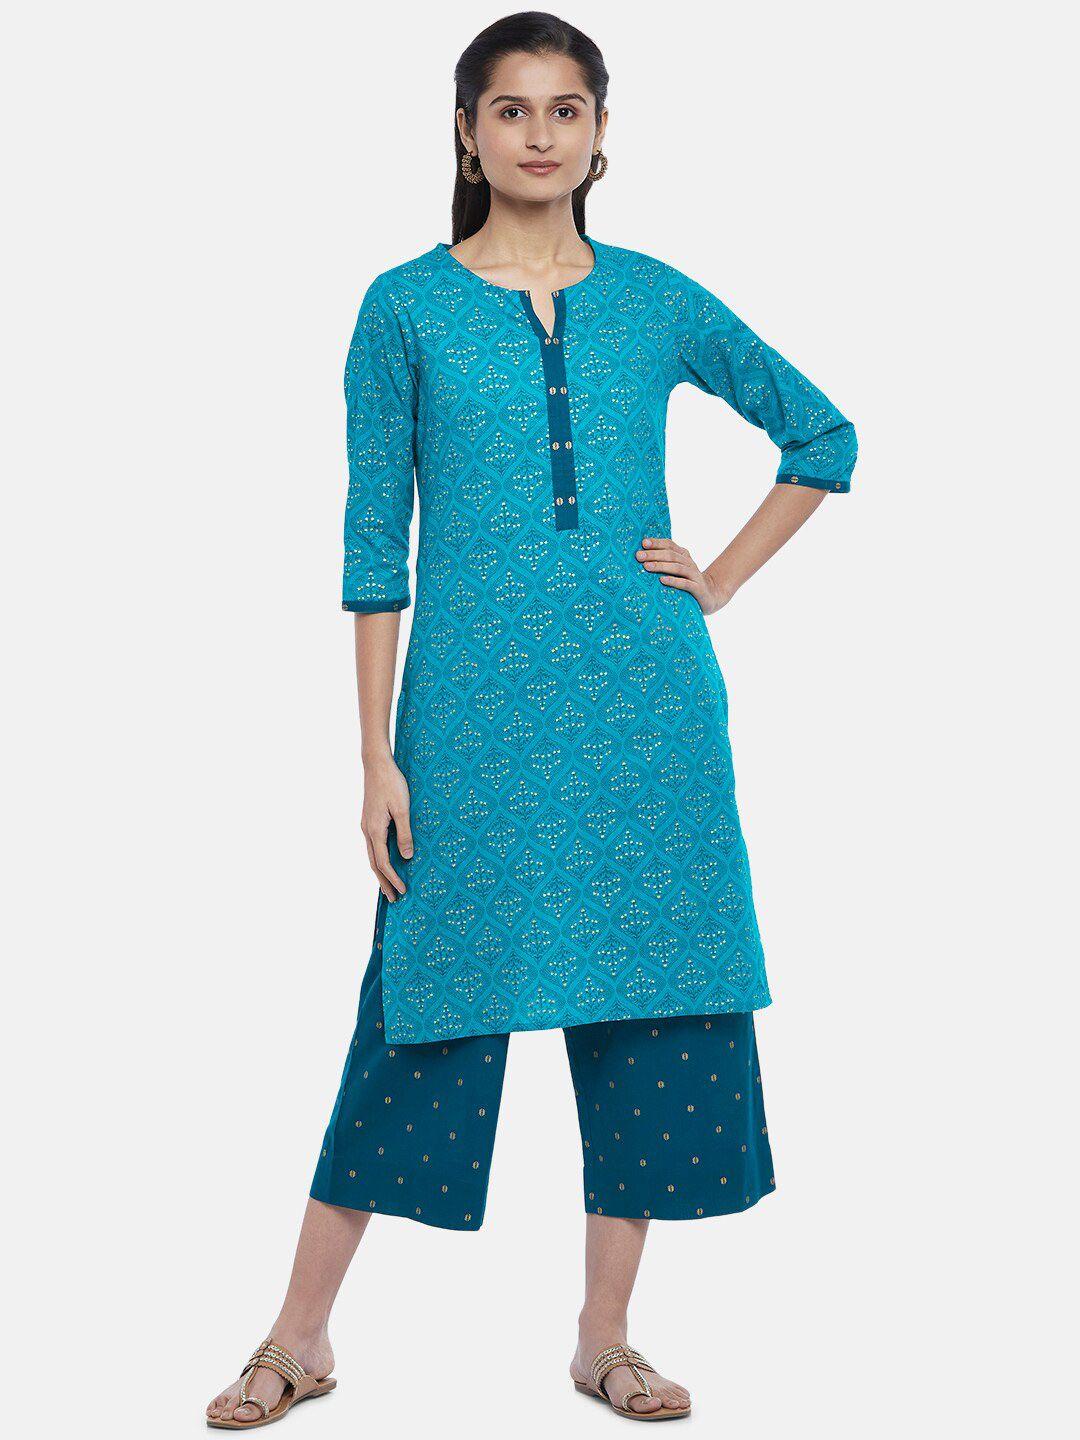 rangmanch-by-pantaloons-women-turquoise-blue-ethnic-motifs-printed-pure-cotton-kurta-set